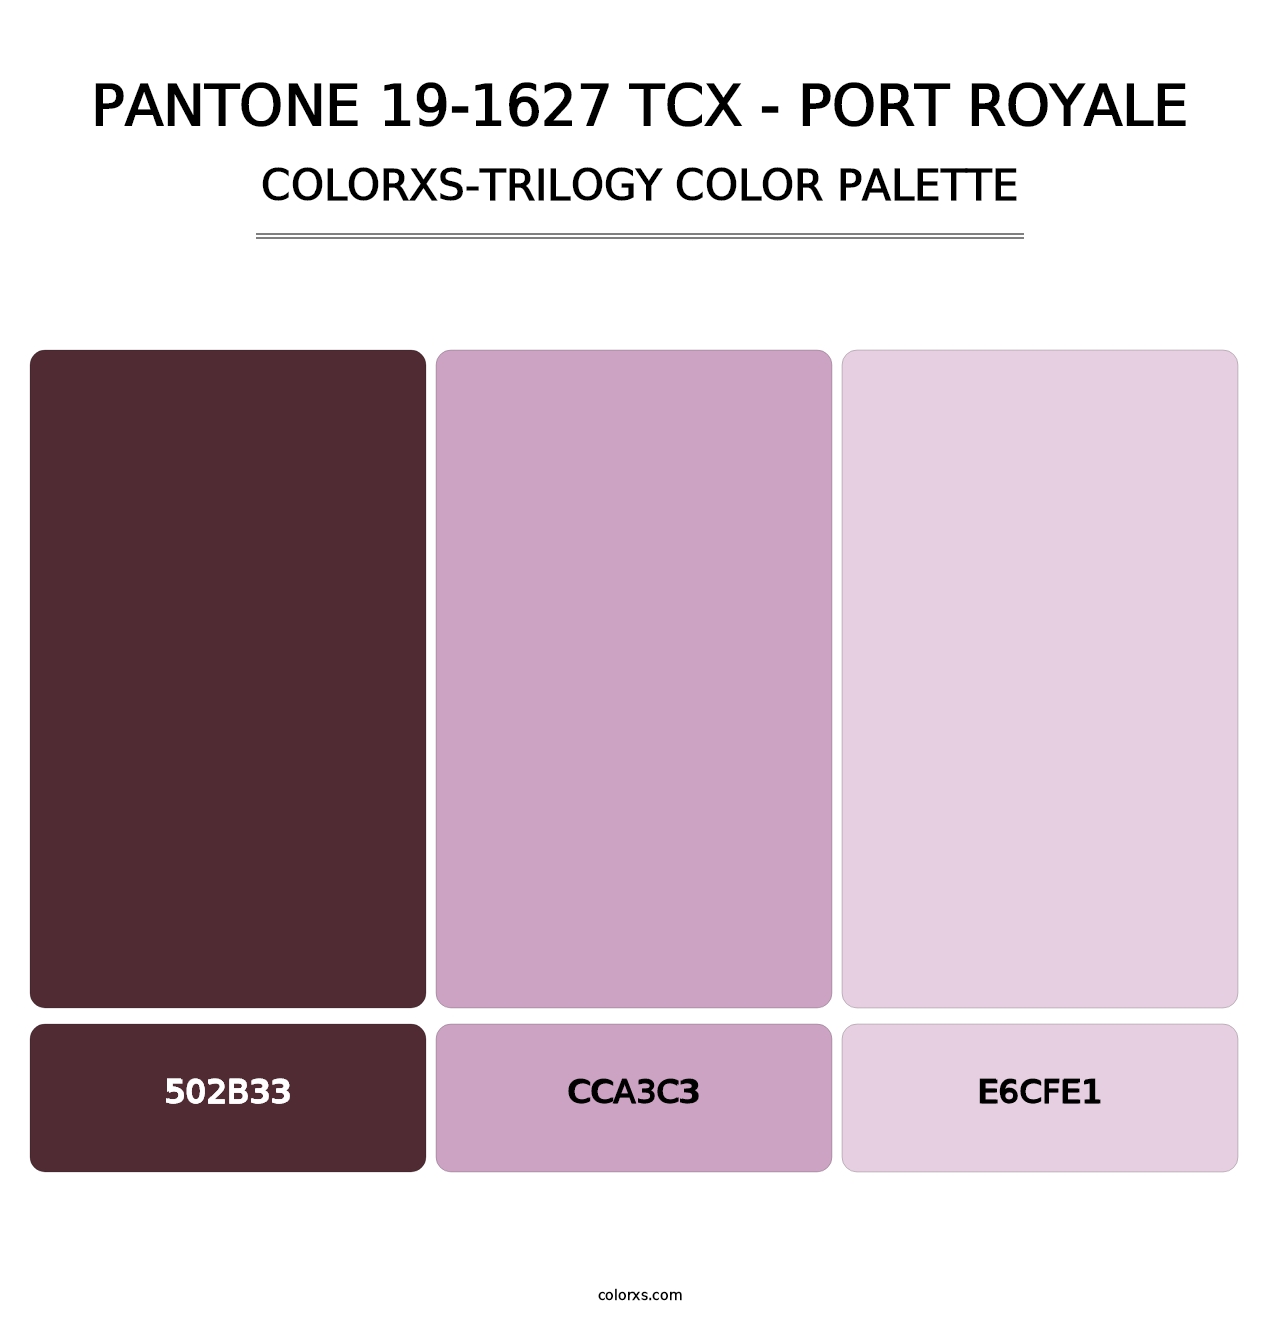 PANTONE 19-1627 TCX - Port Royale - Colorxs Trilogy Palette